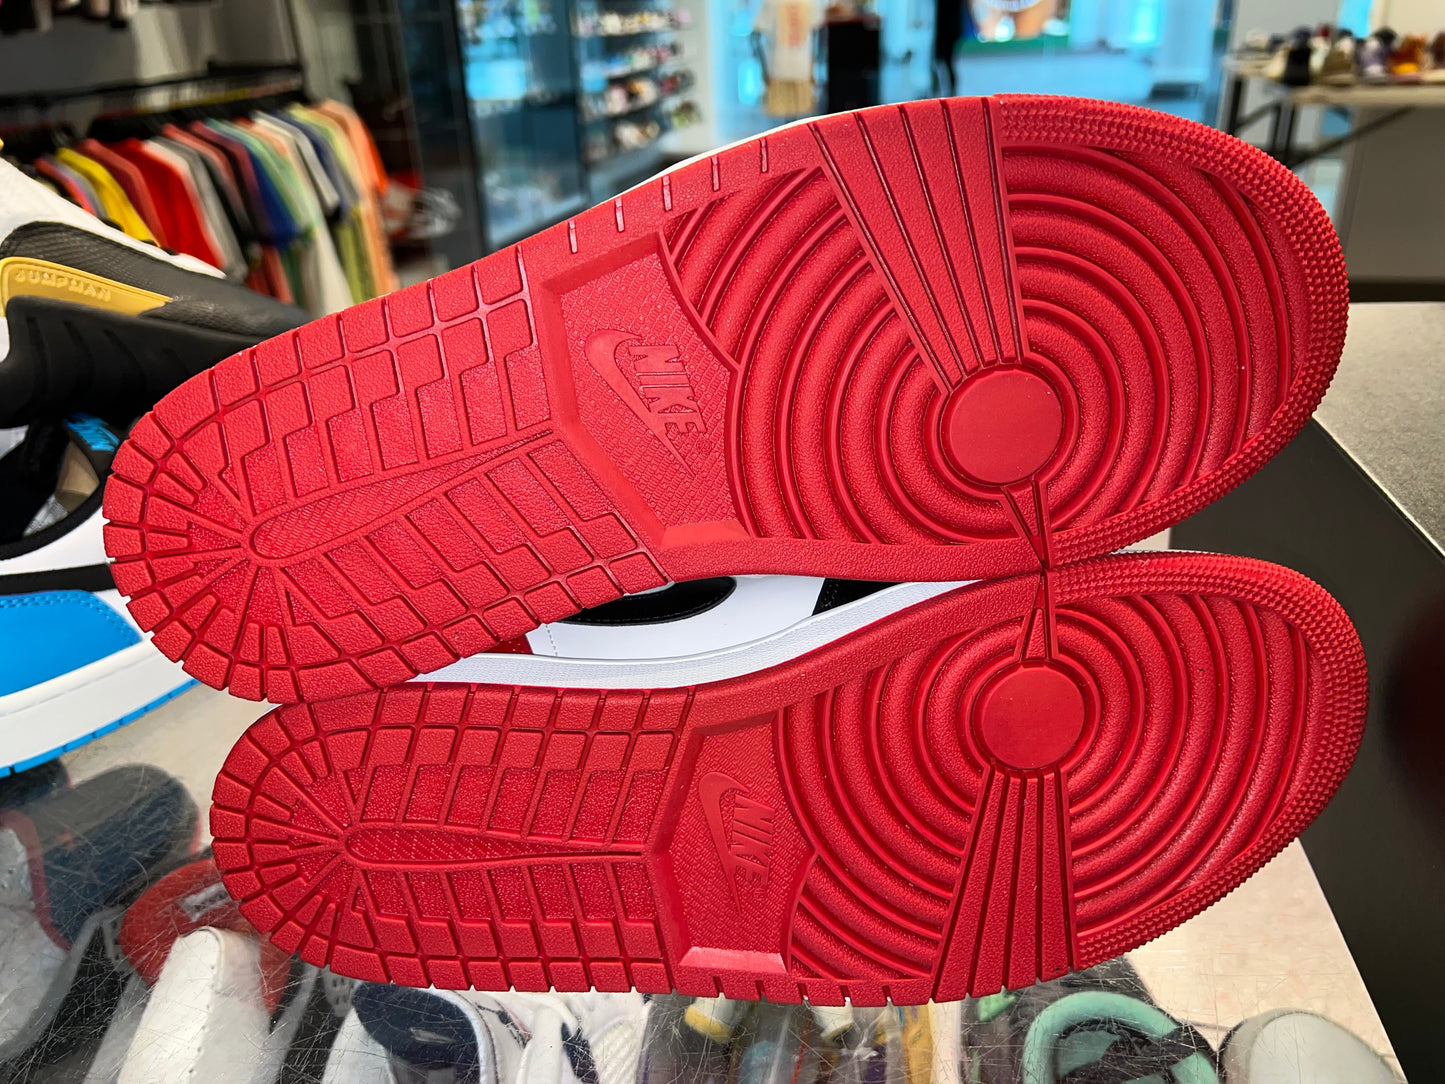 Size 10.5 Air Jordan 1 Low "Bred Toe" Brand New (Mall)